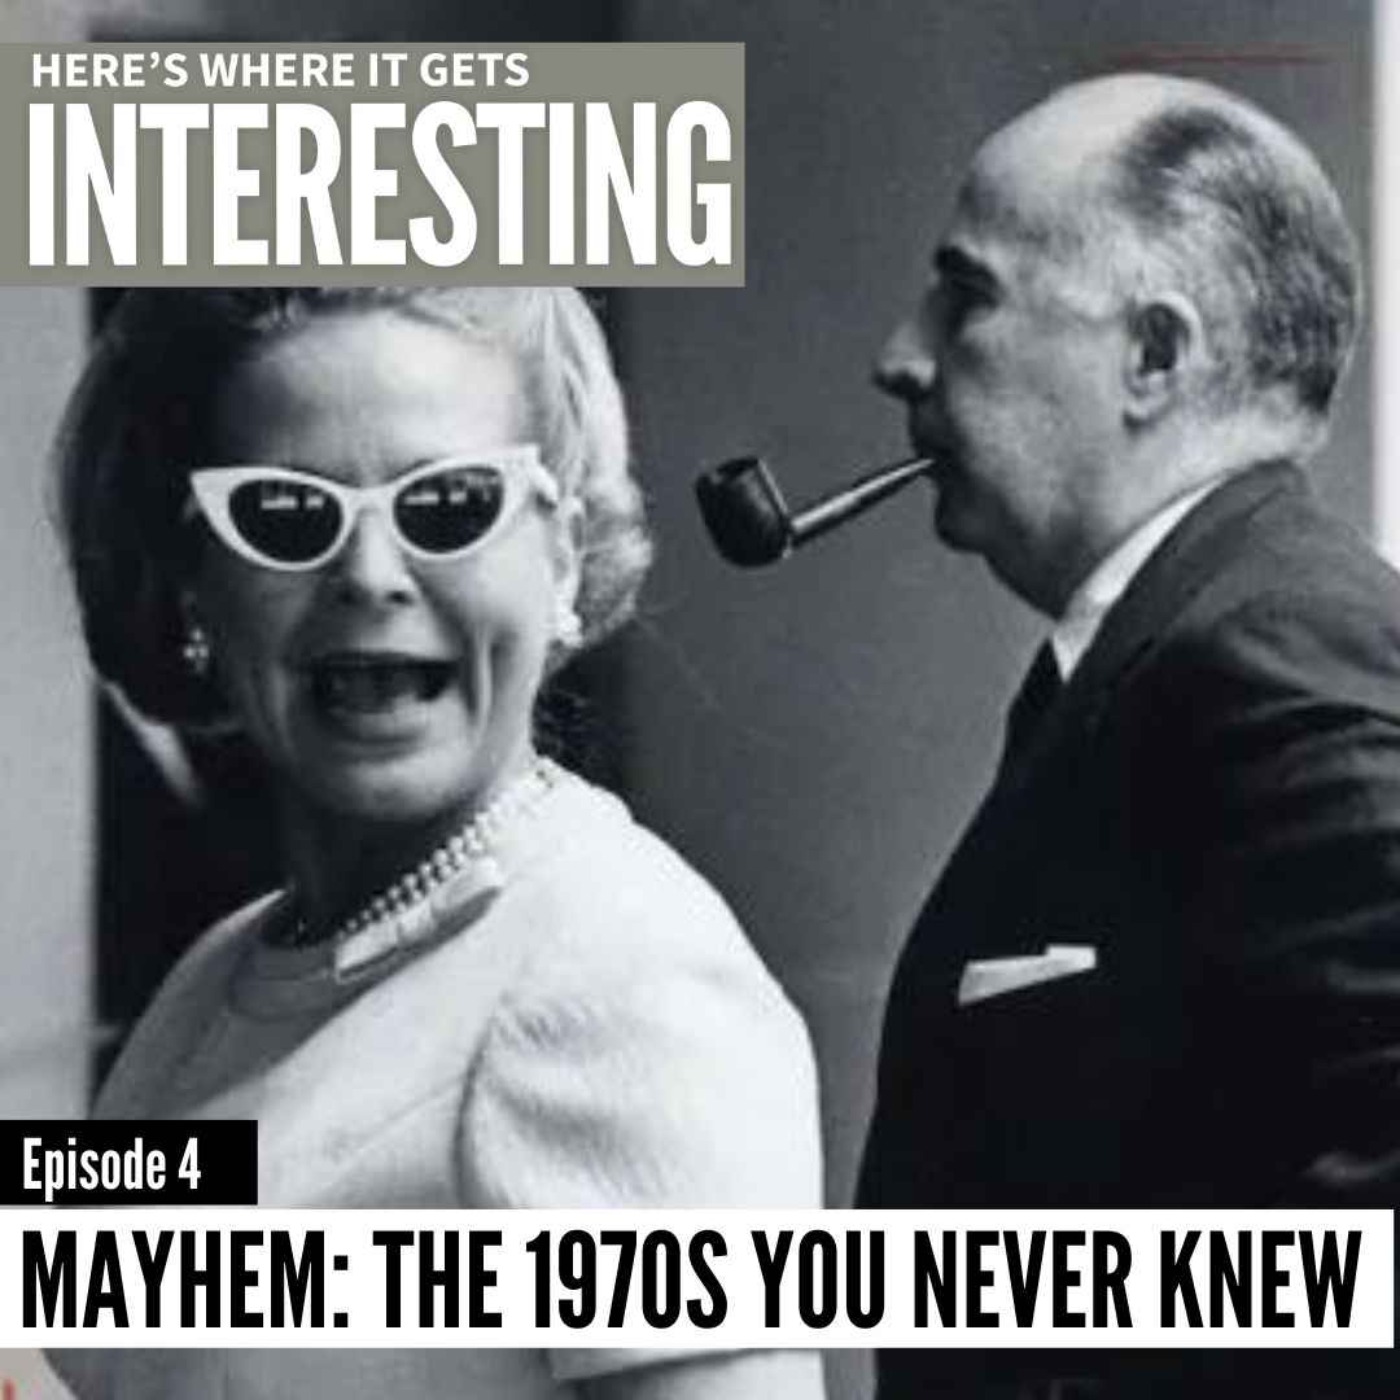 Mayhem: The 1970s You Never Knew, Episode 4